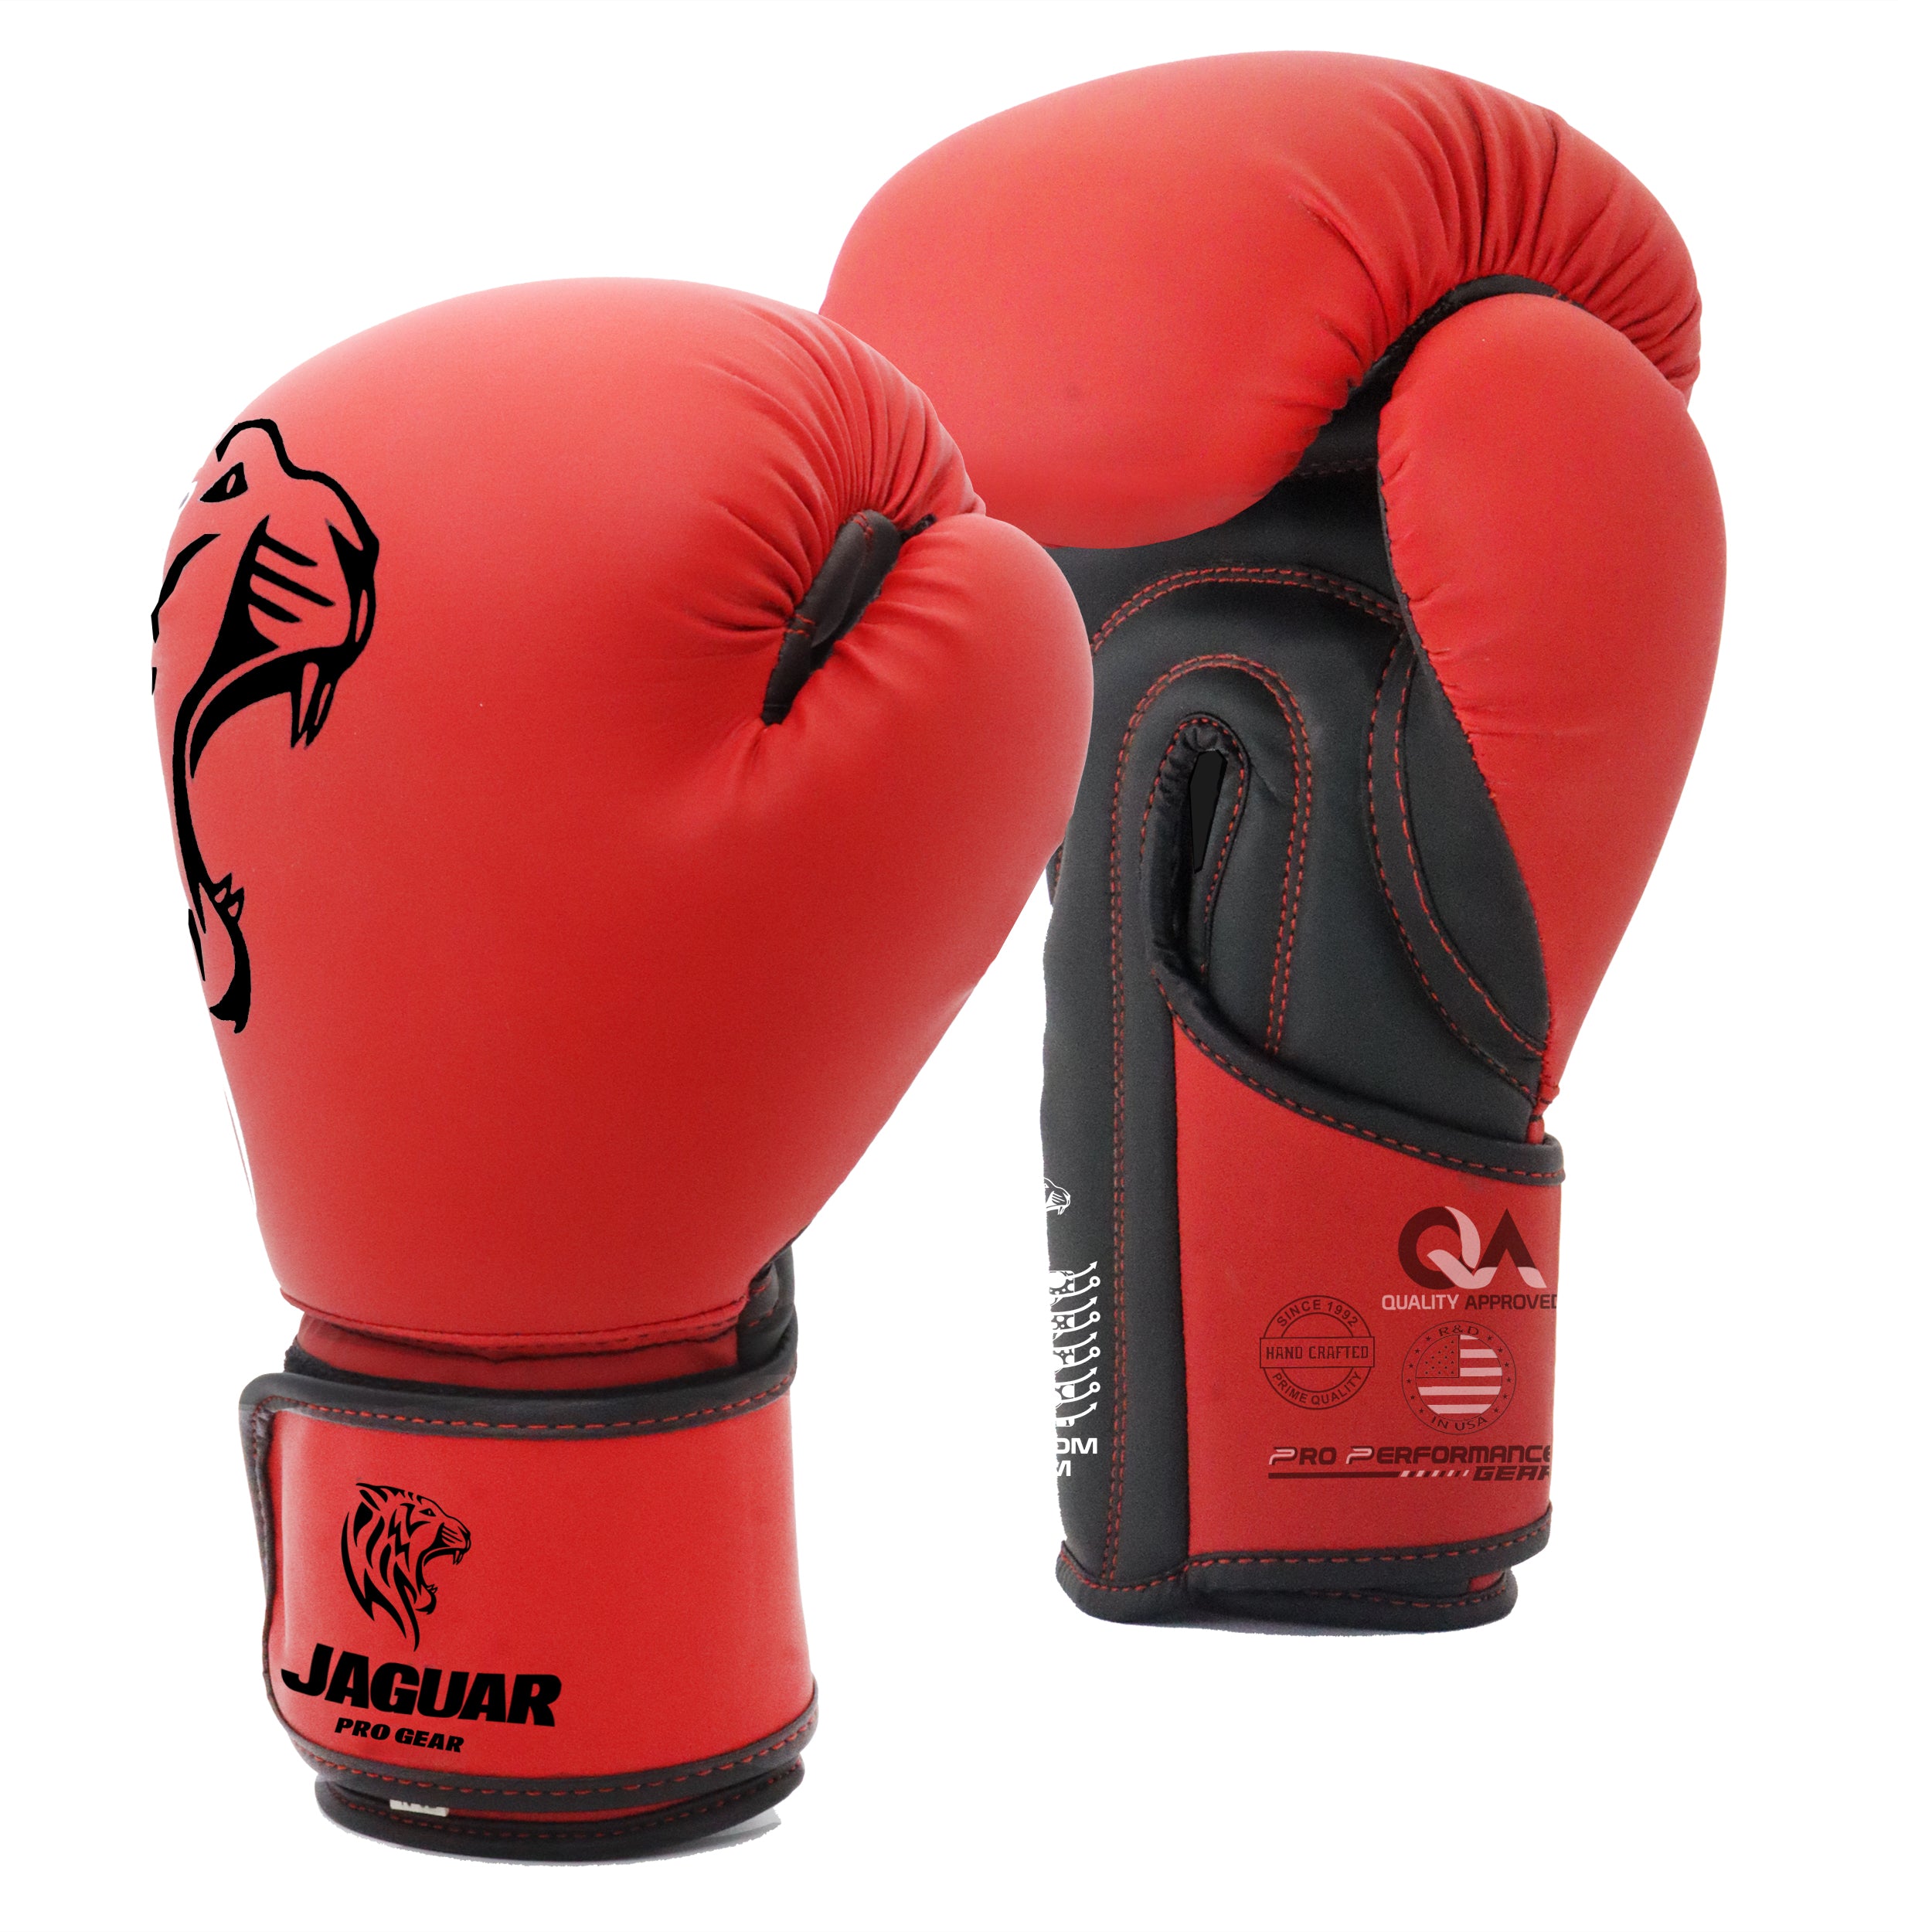 Boxing Gloves – Jaguar Pro Gear